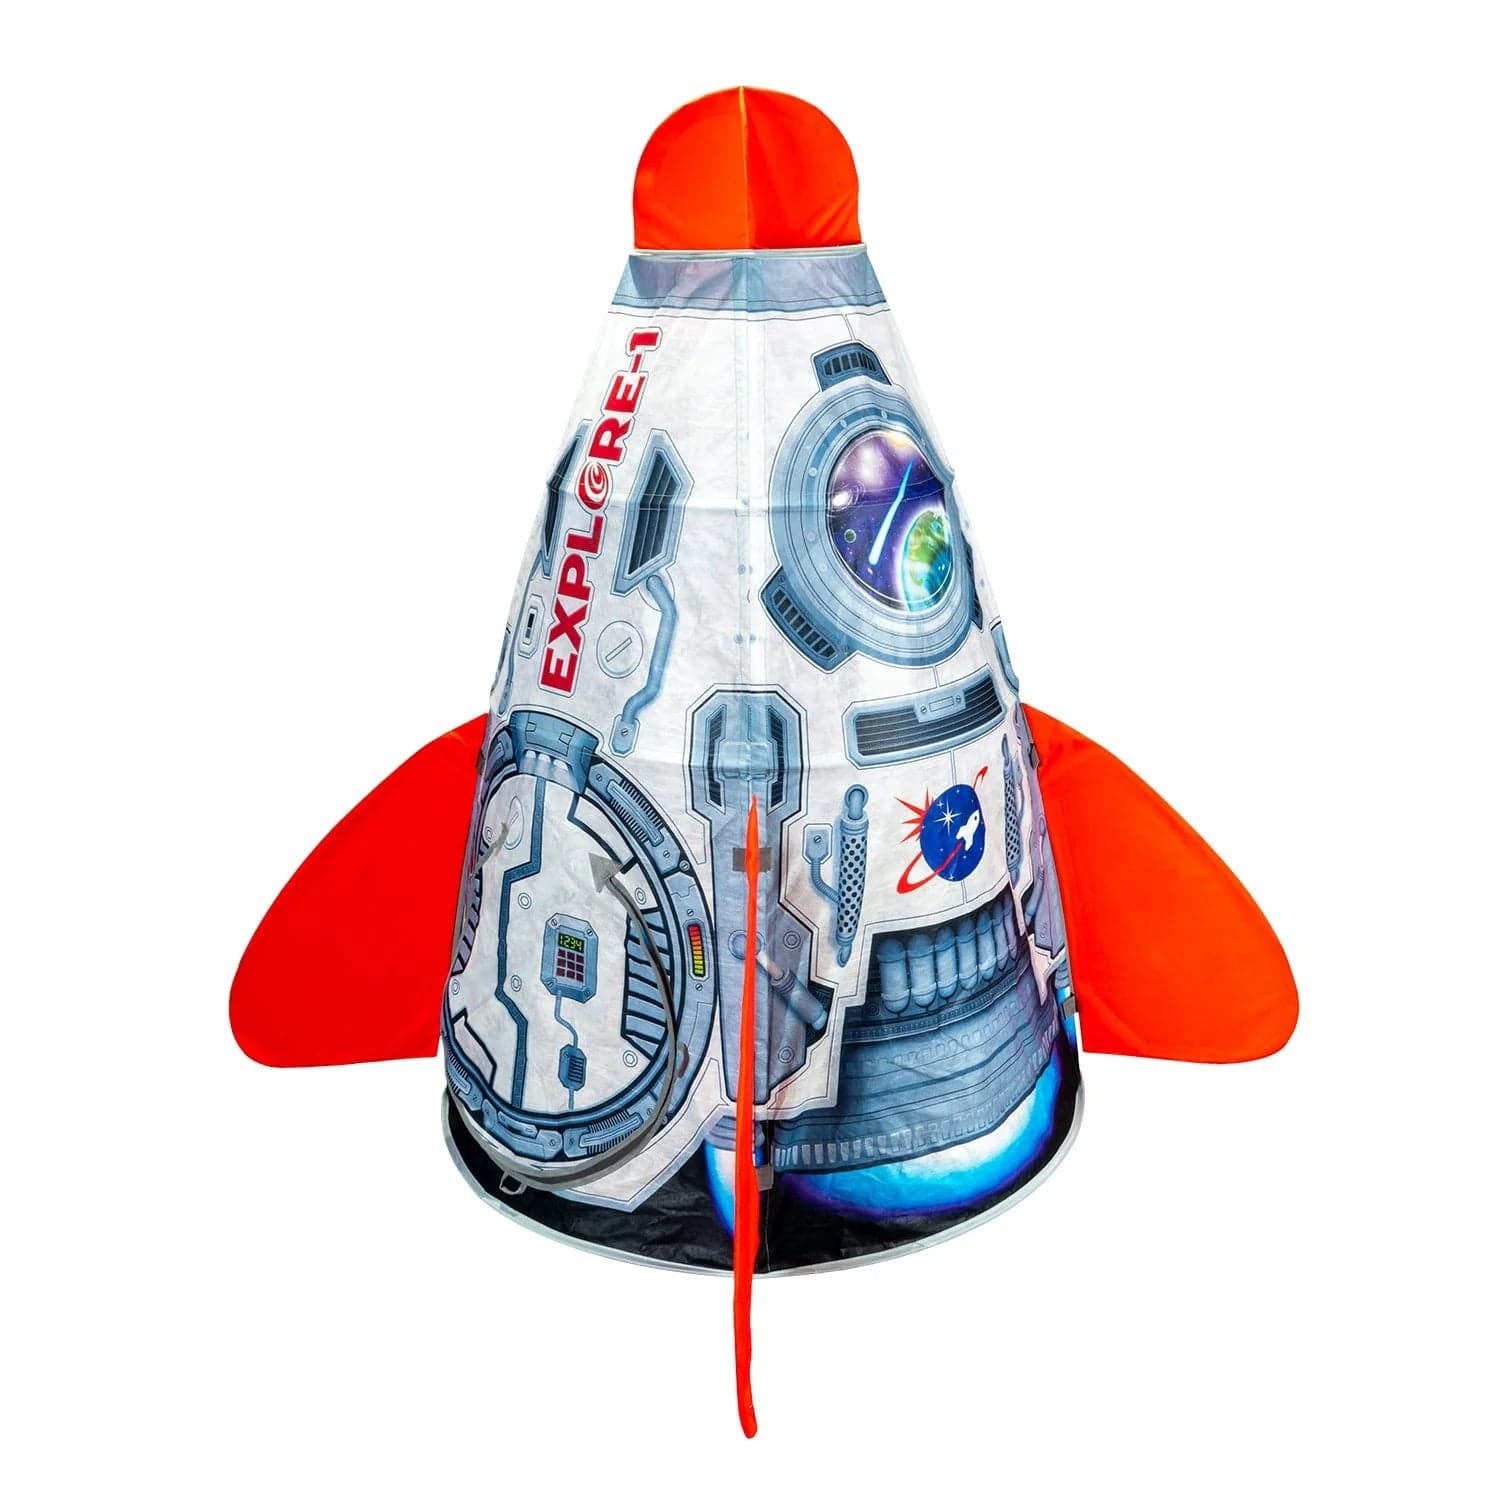 ExploreHut Toy ExploreHut Space Rocket - 88-70802